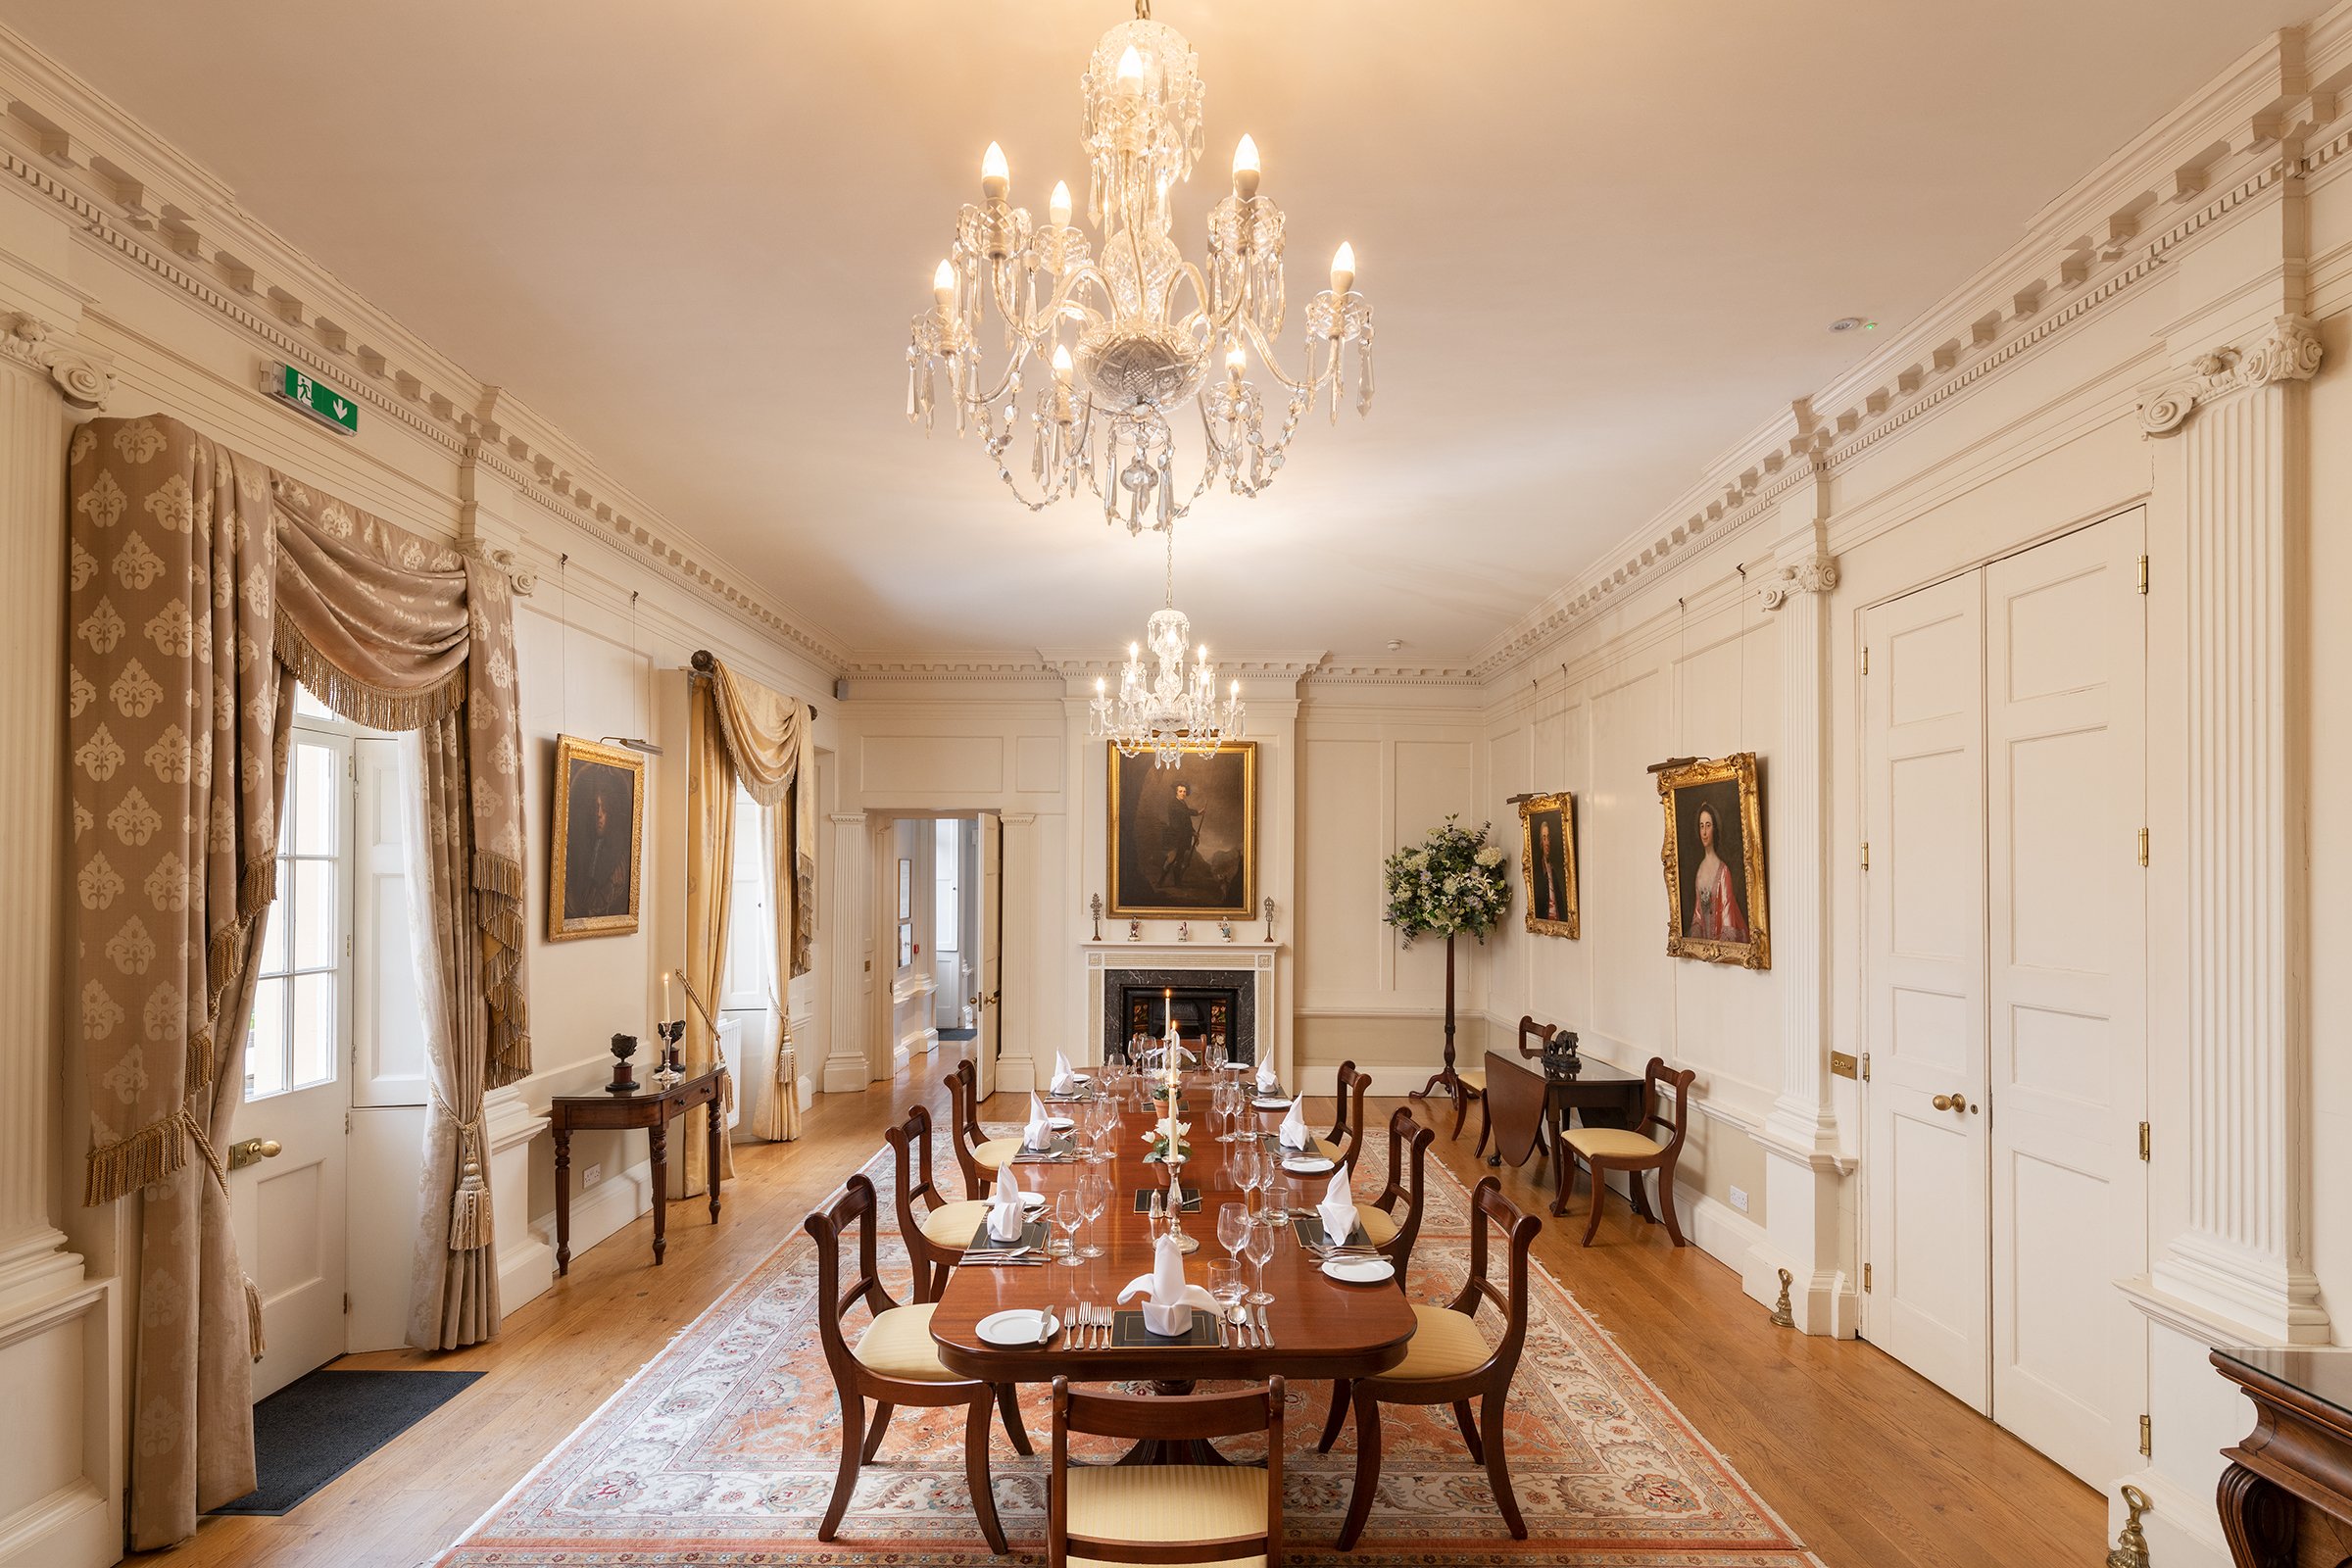 07 Elegant Dining Room at Pentillie Castle by Richard Downer Photography.jpg